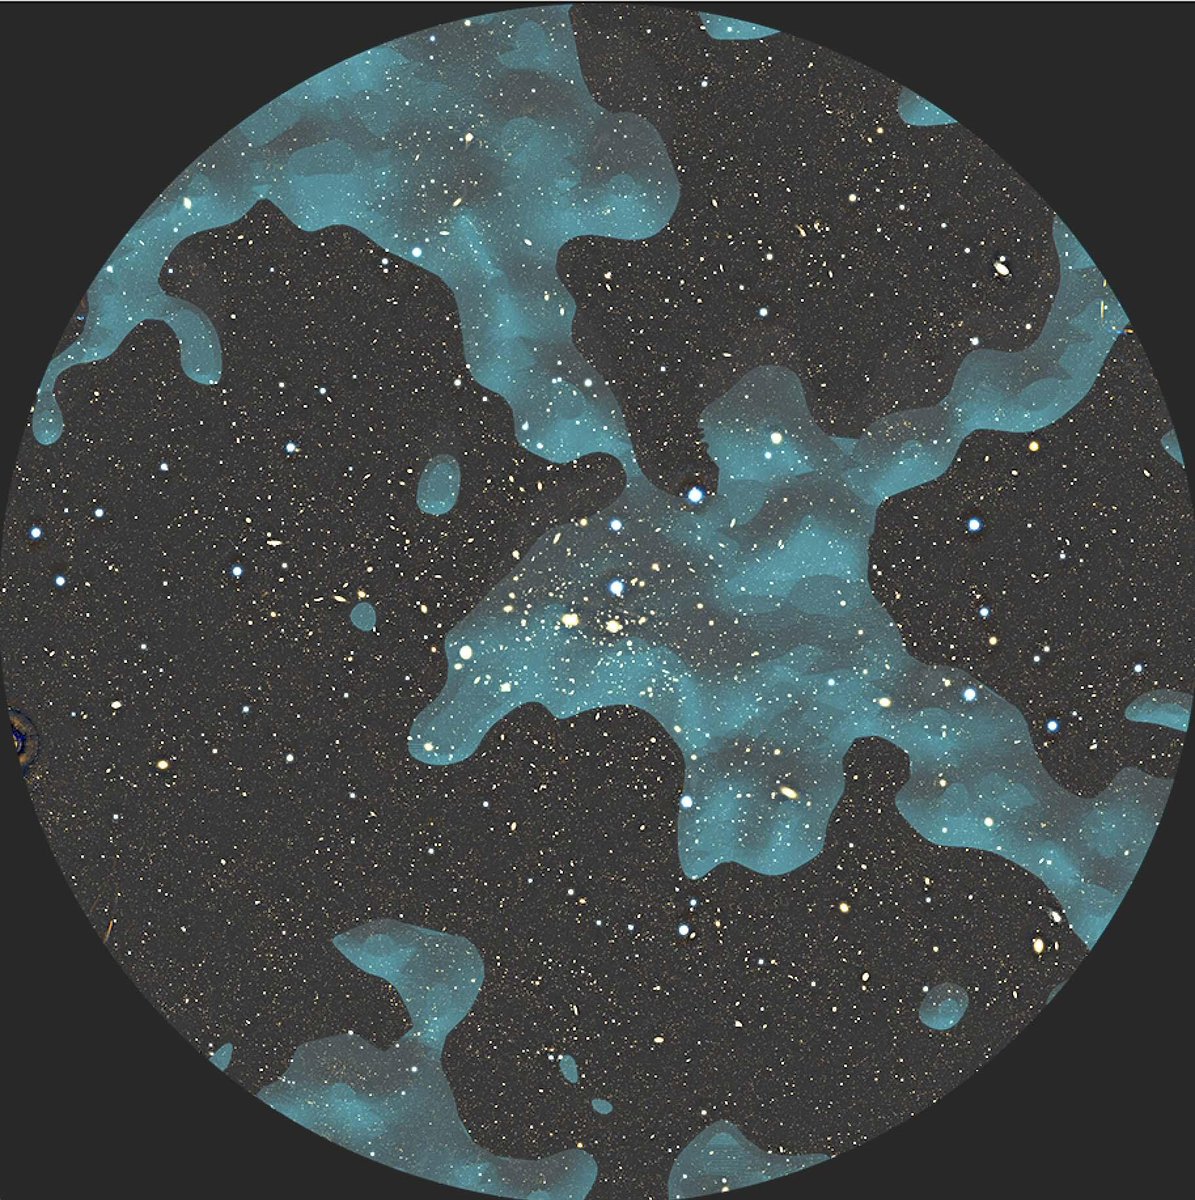 Cosmic web of dark matter as seen via weak gravitational lensing by the Subaru telescope. Beautiful. subarutelescope.org/en/results/202…